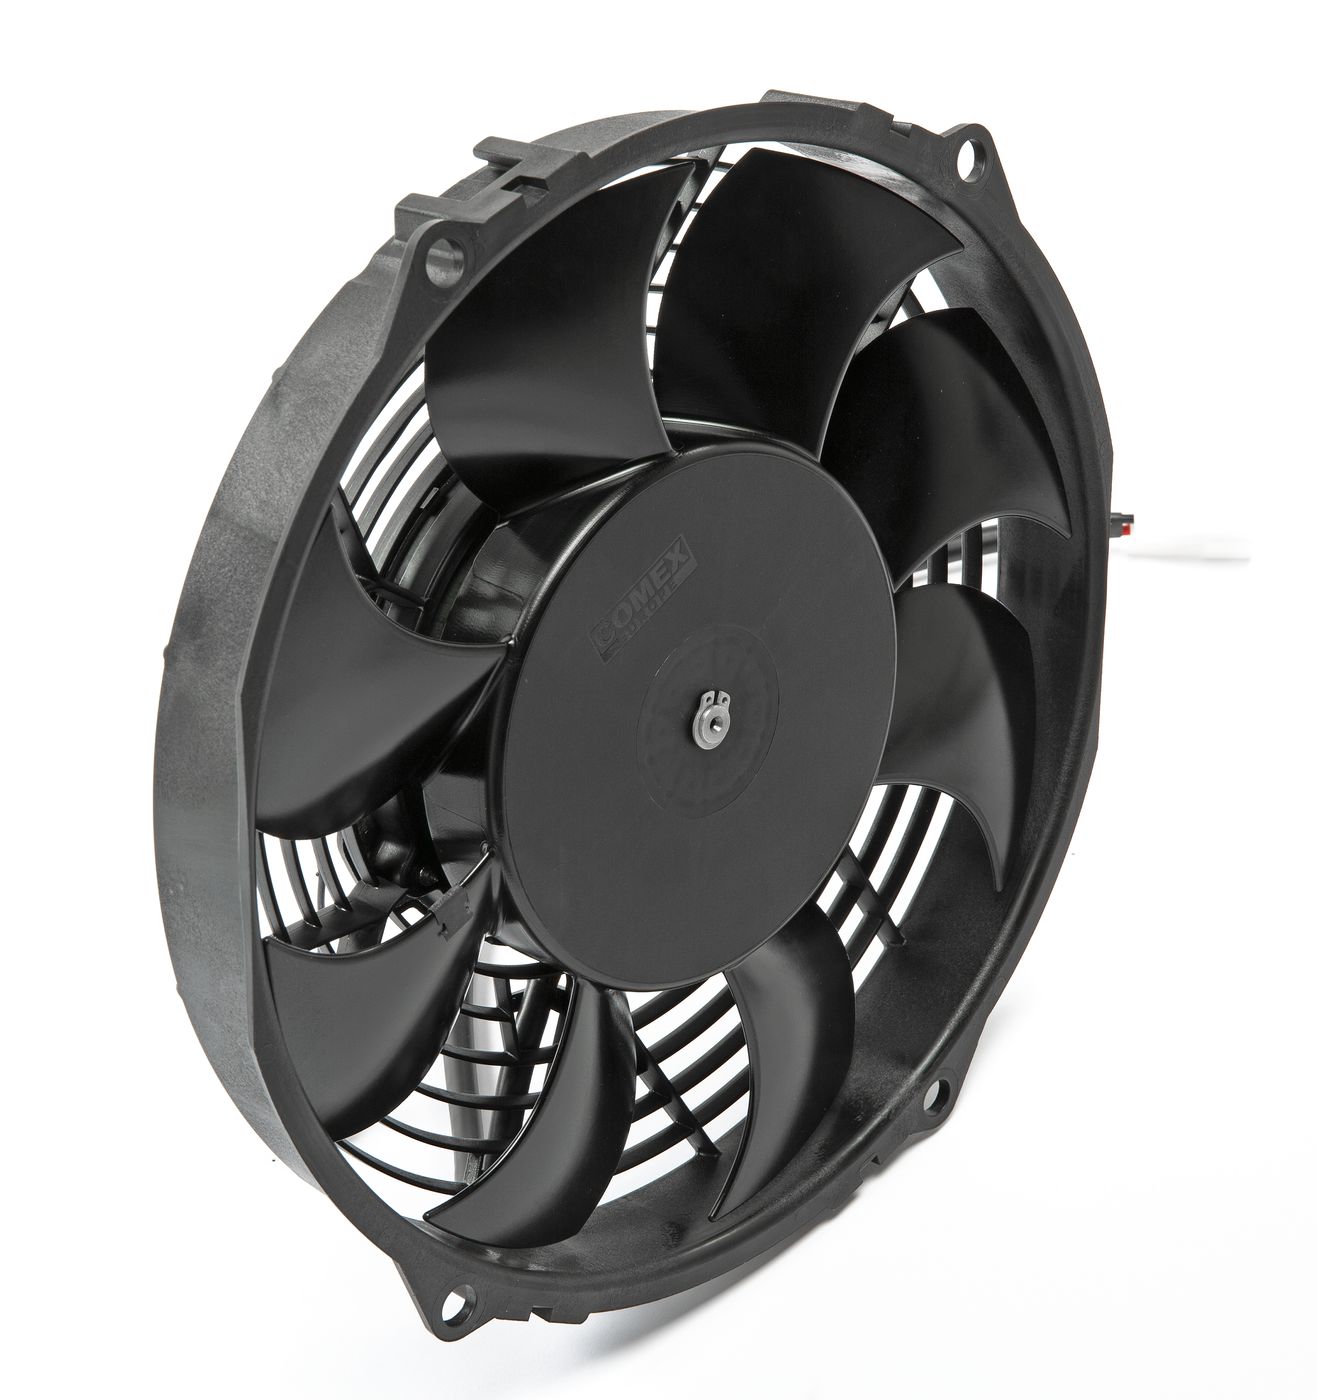 Elektrolüfter
Electric fan
Ventilateur électrique
Wentylator e